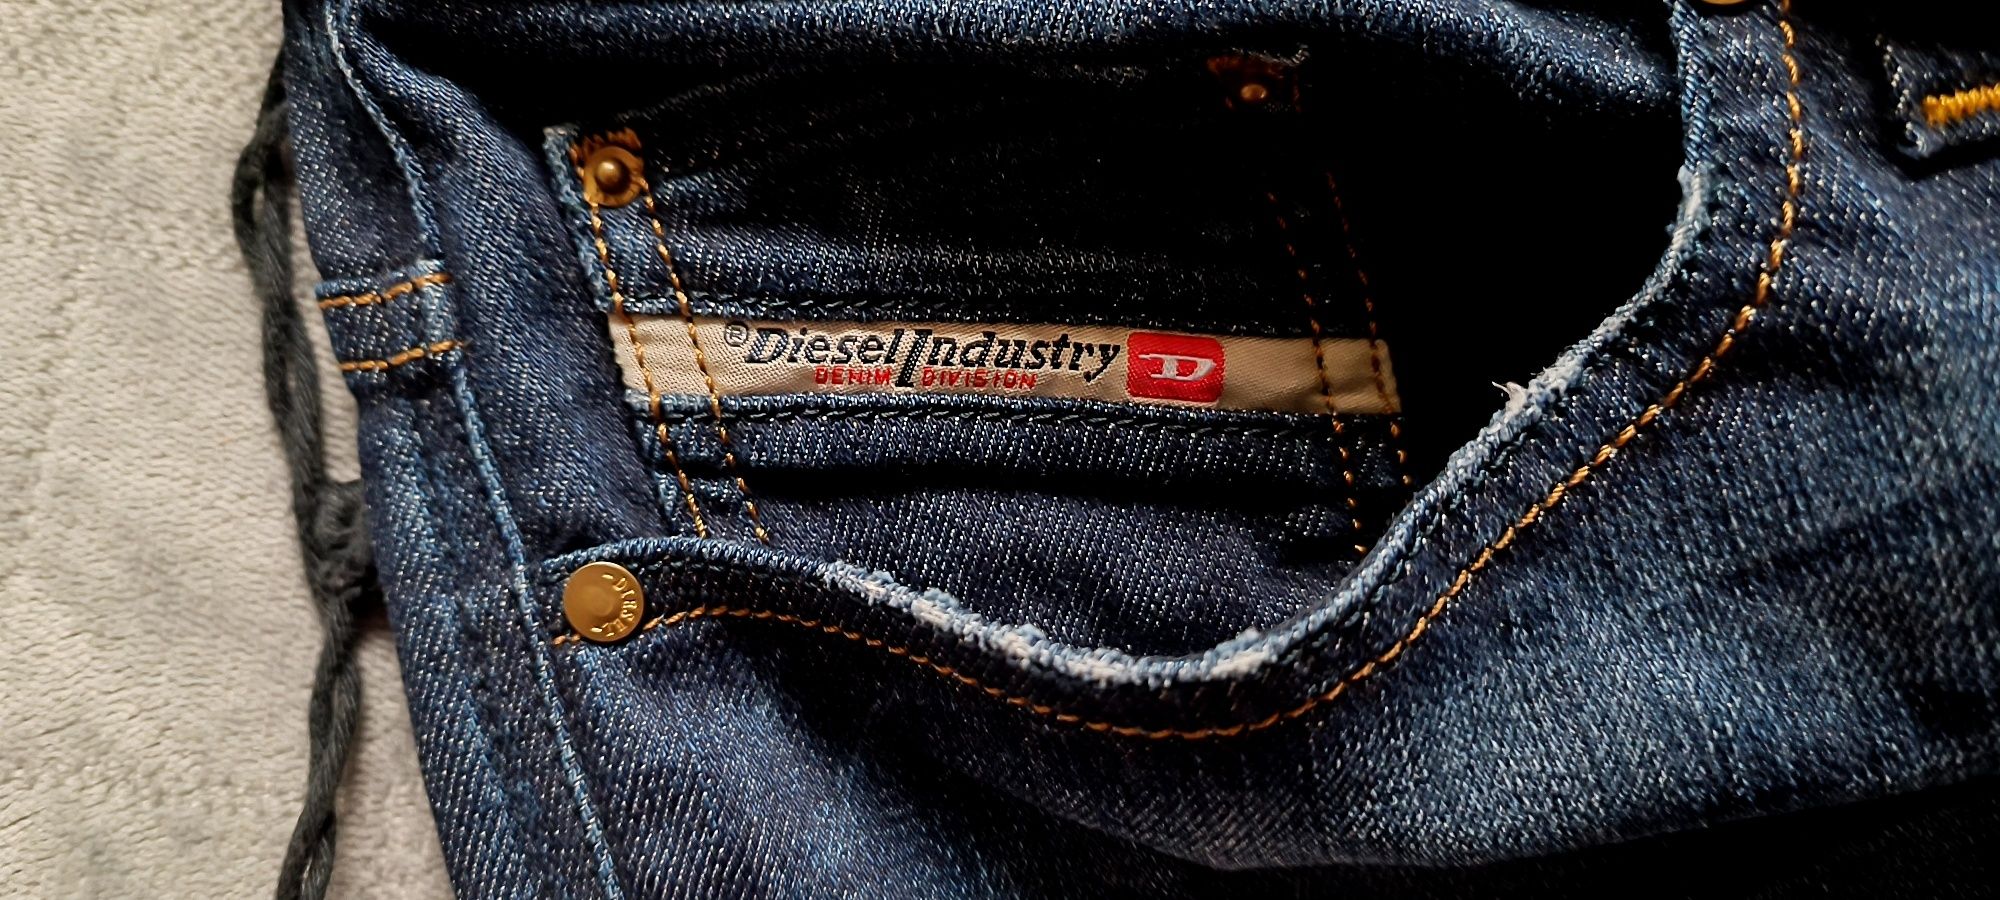 Diesel industrial spodnie unikatowe XL